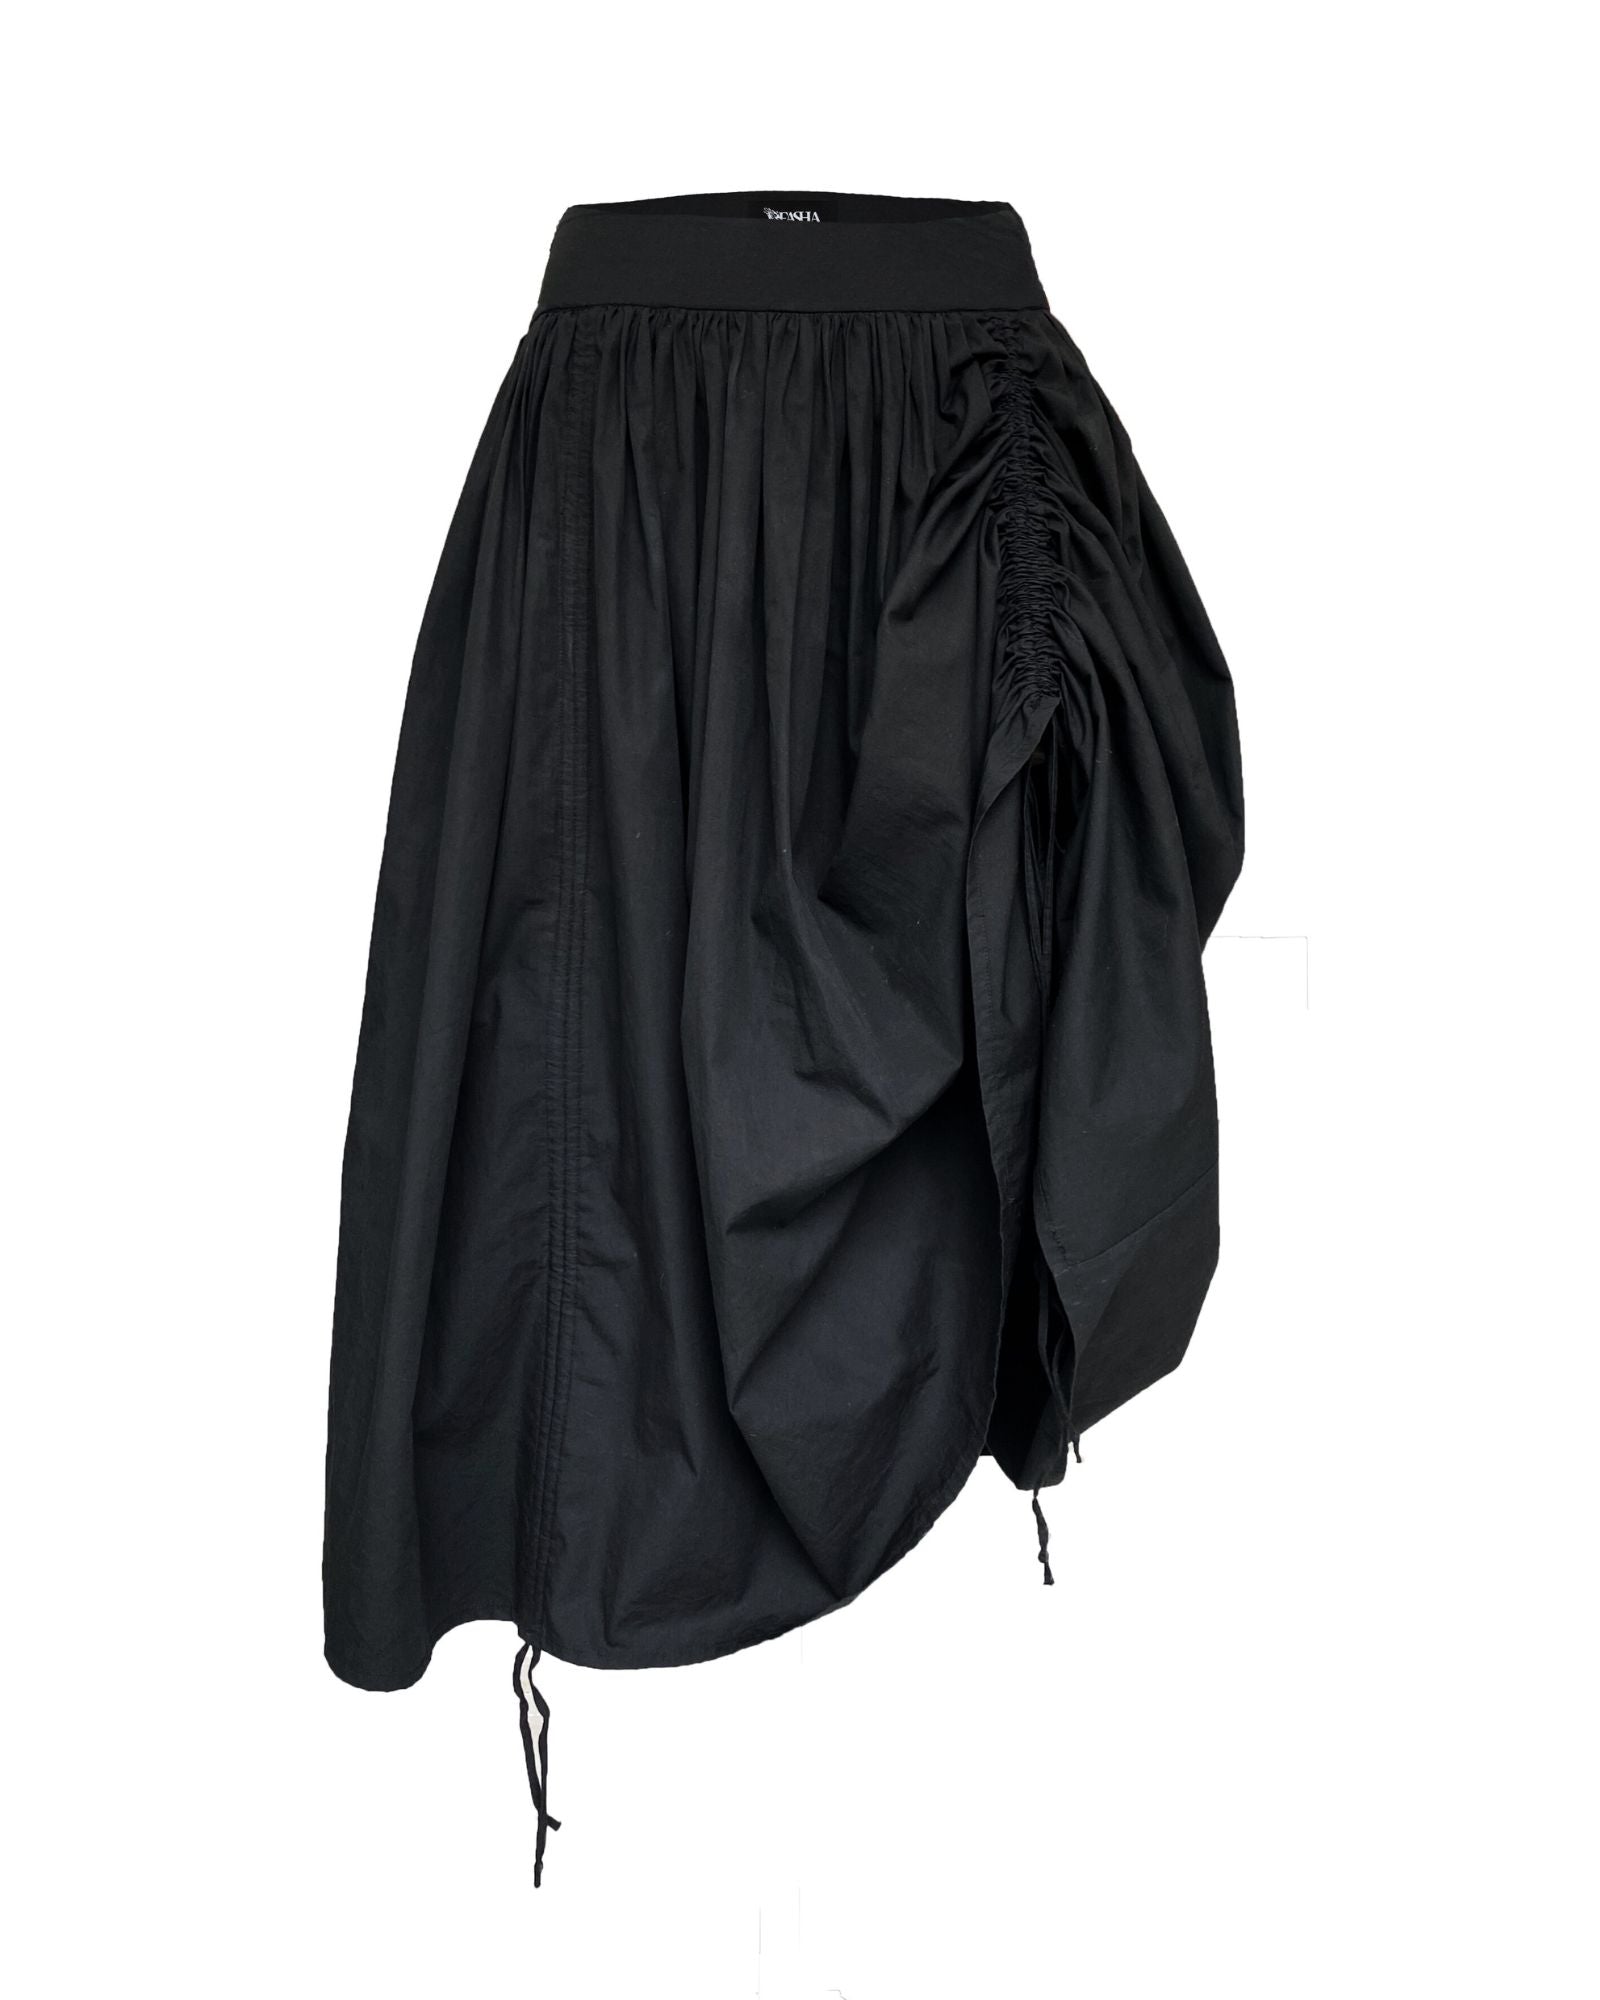 The Lola Skirt in Black